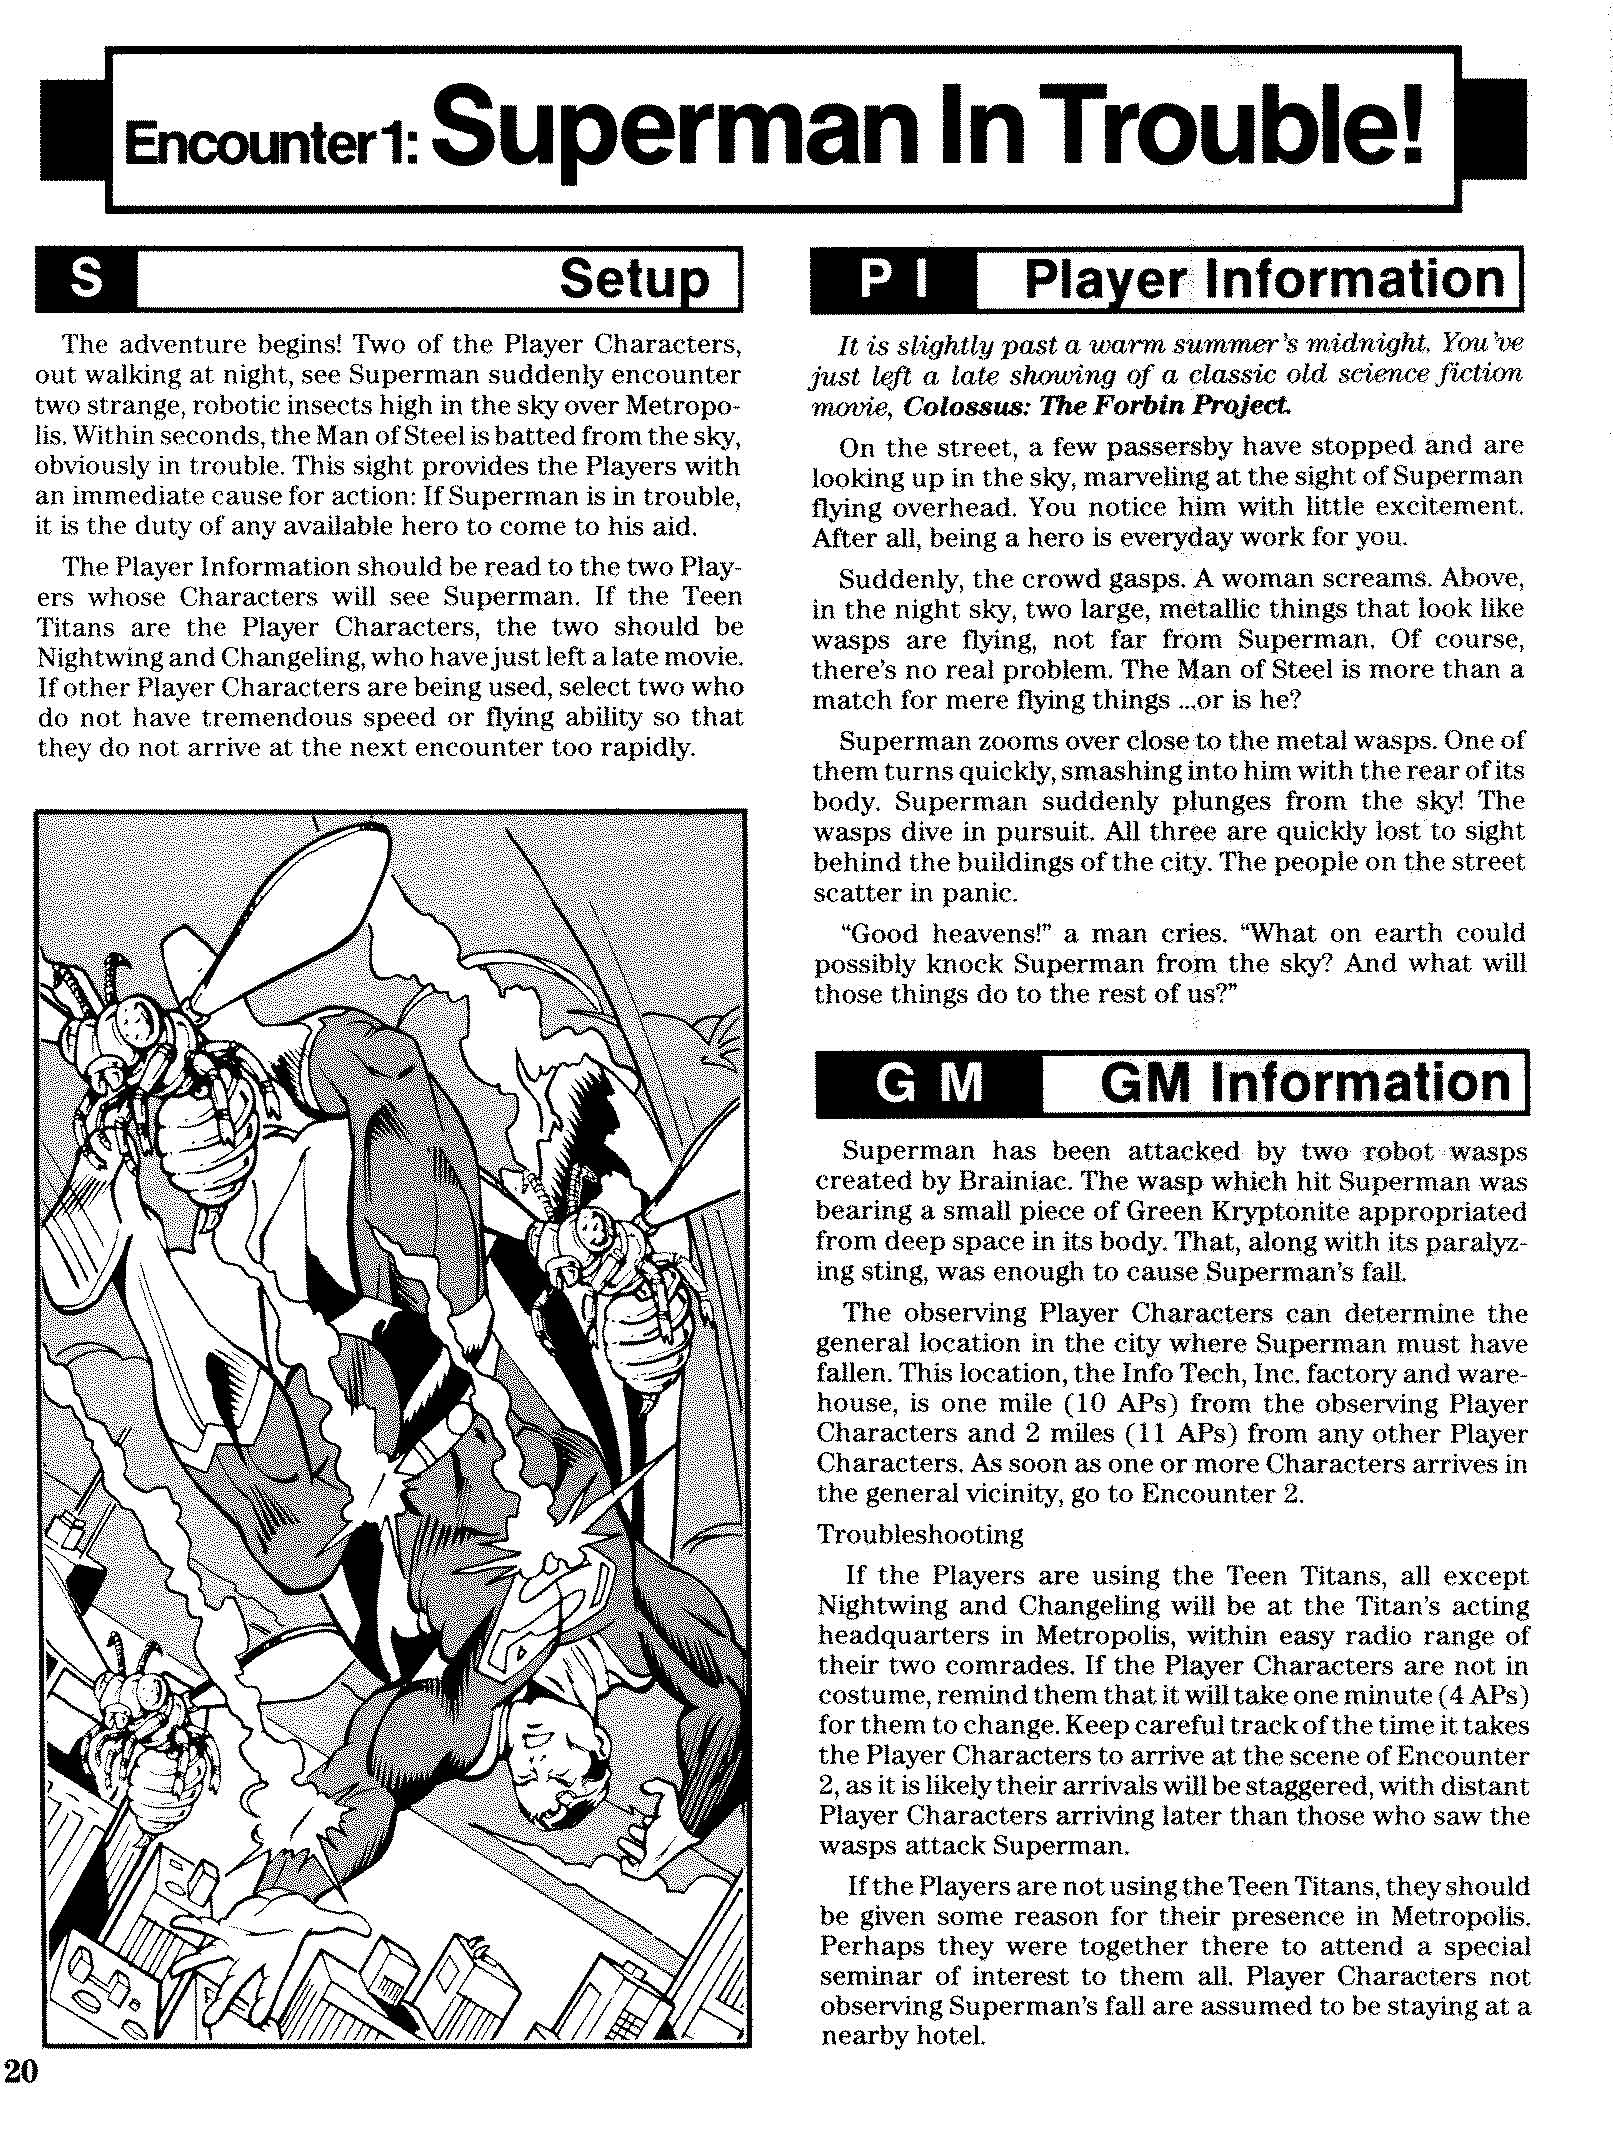 Mayfair Games DC Heroes The Doomsday Program RPG module with Brainiac!